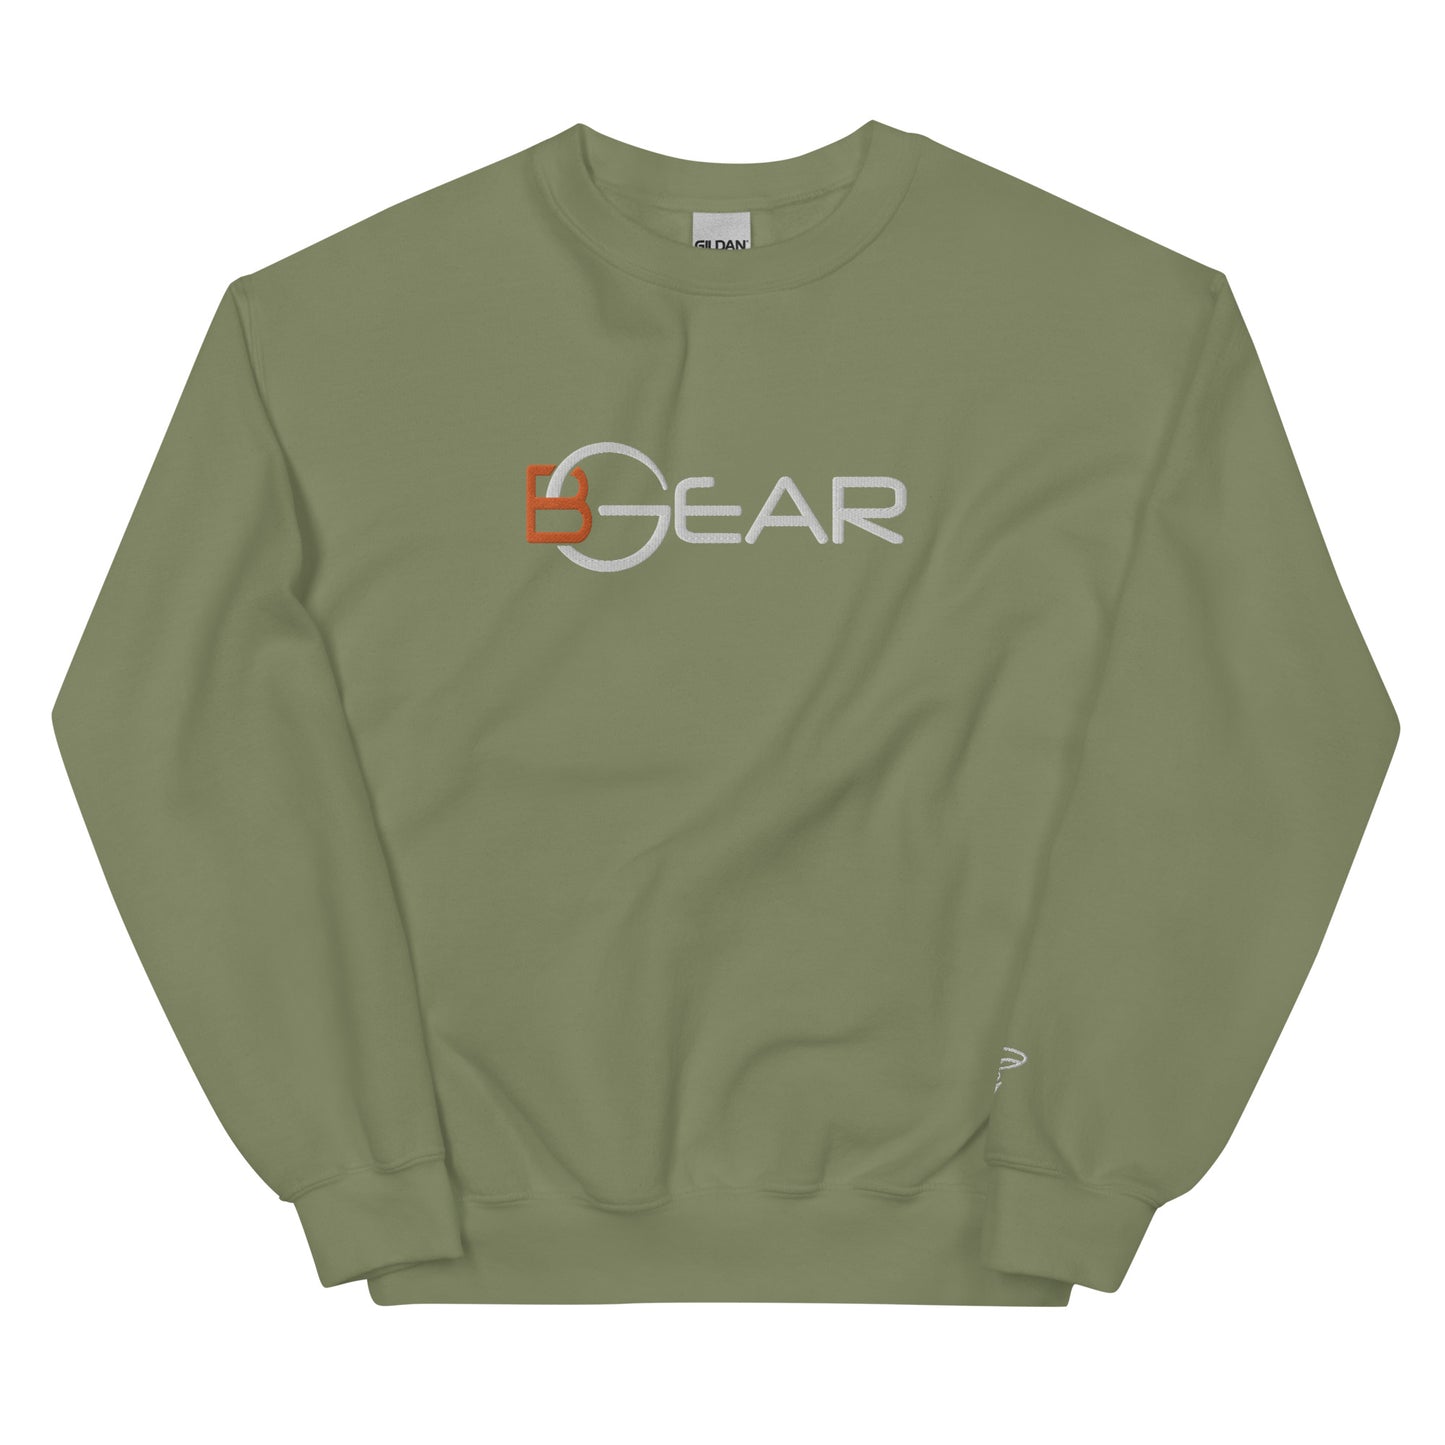 BGear Long Sleeve Crew Neck Sweatshirt - Center BGear Logo